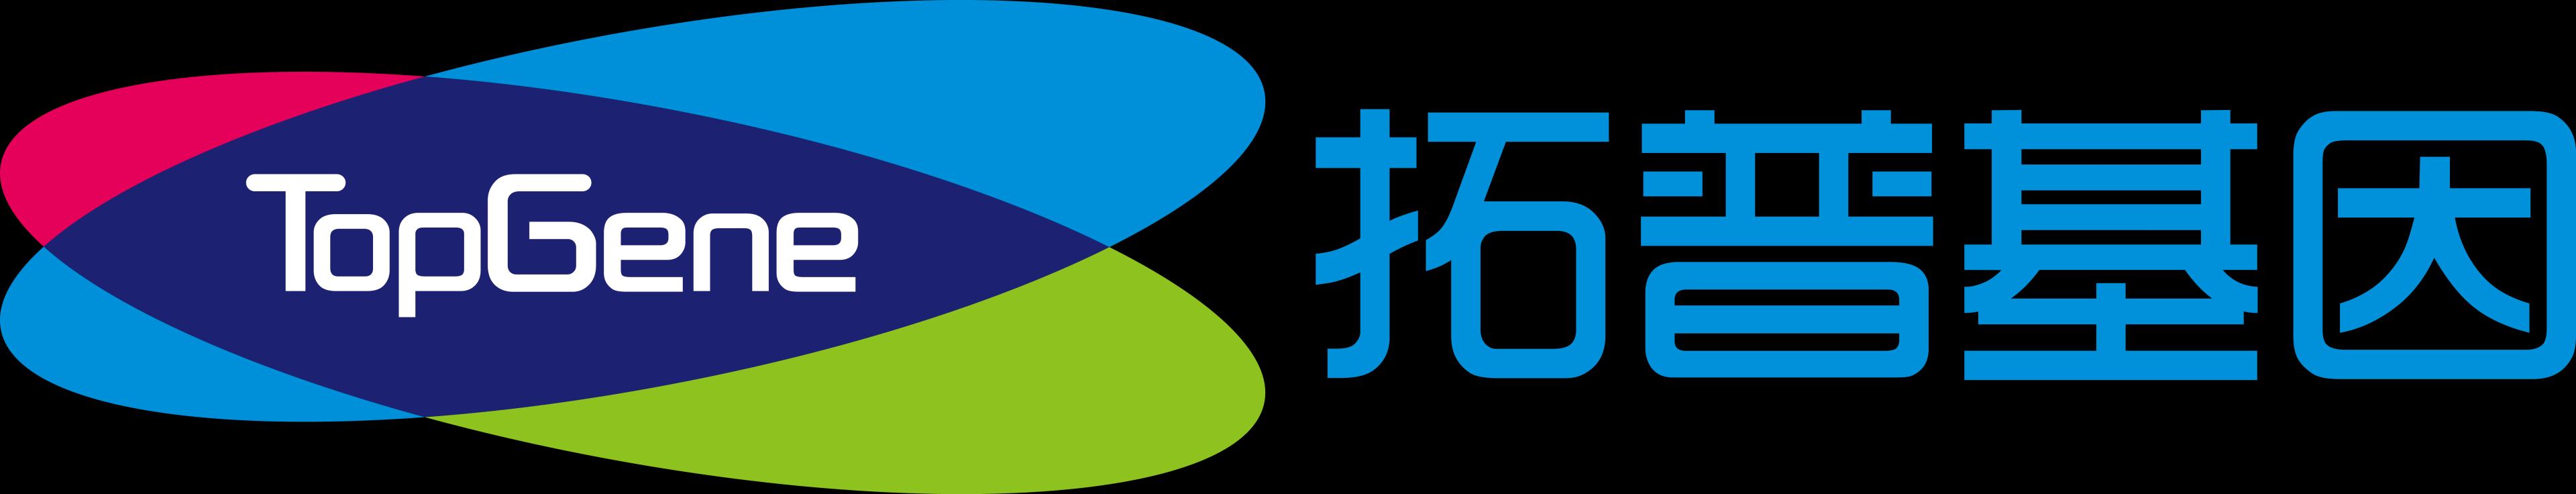 Topgene (拓普基因)_logo